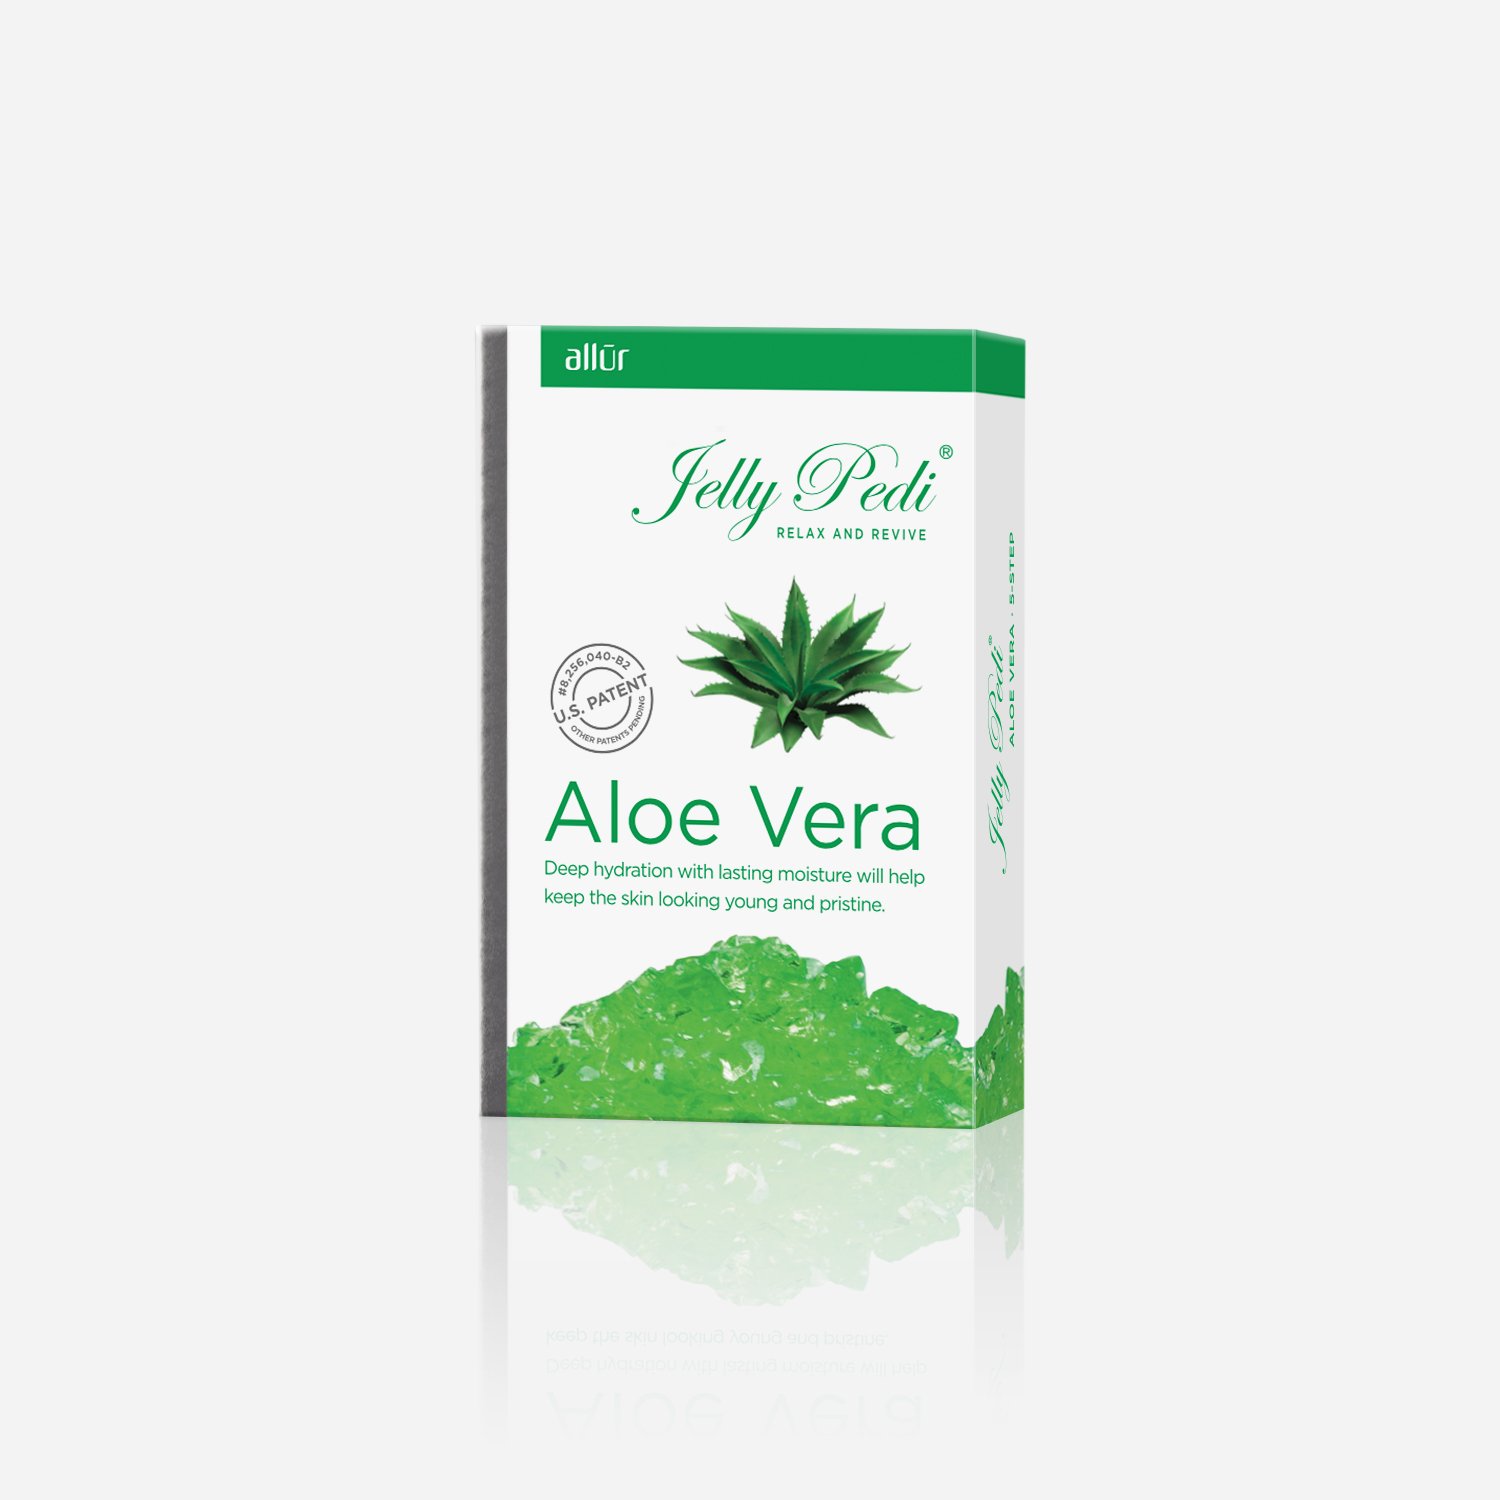 Jelly Pedi Aloe Vera 5-Step